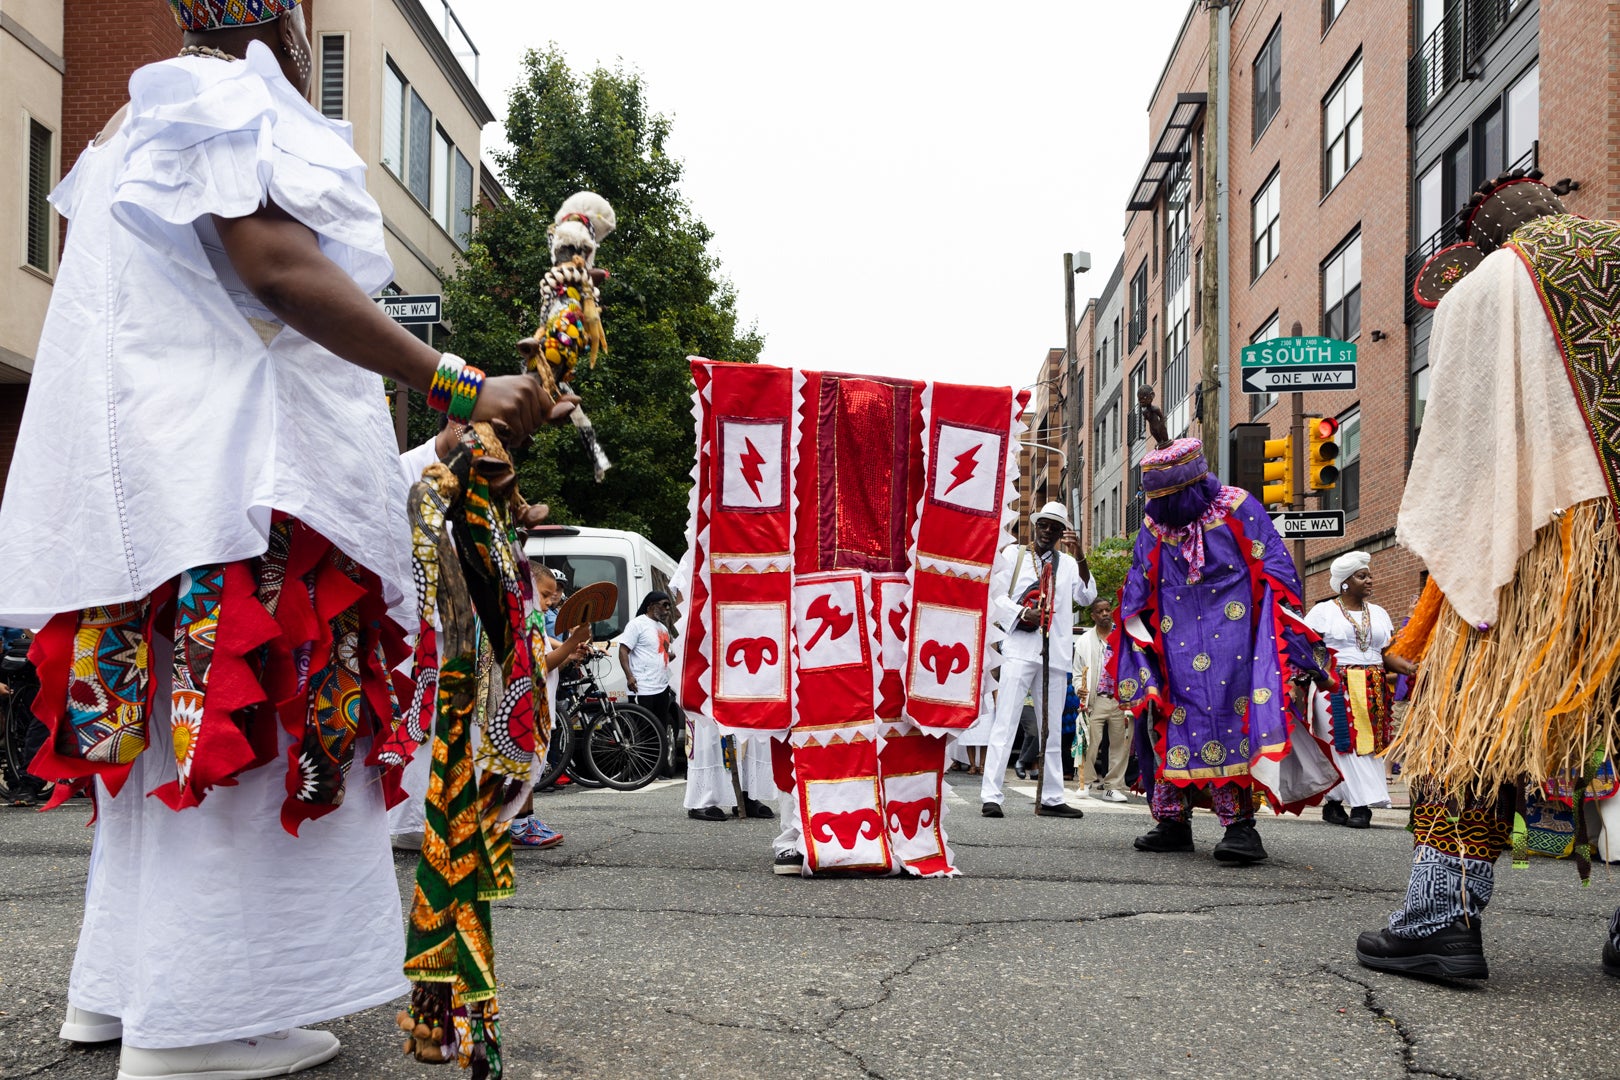 Odunde festival returns to Philadelphia to celebrate African heritage